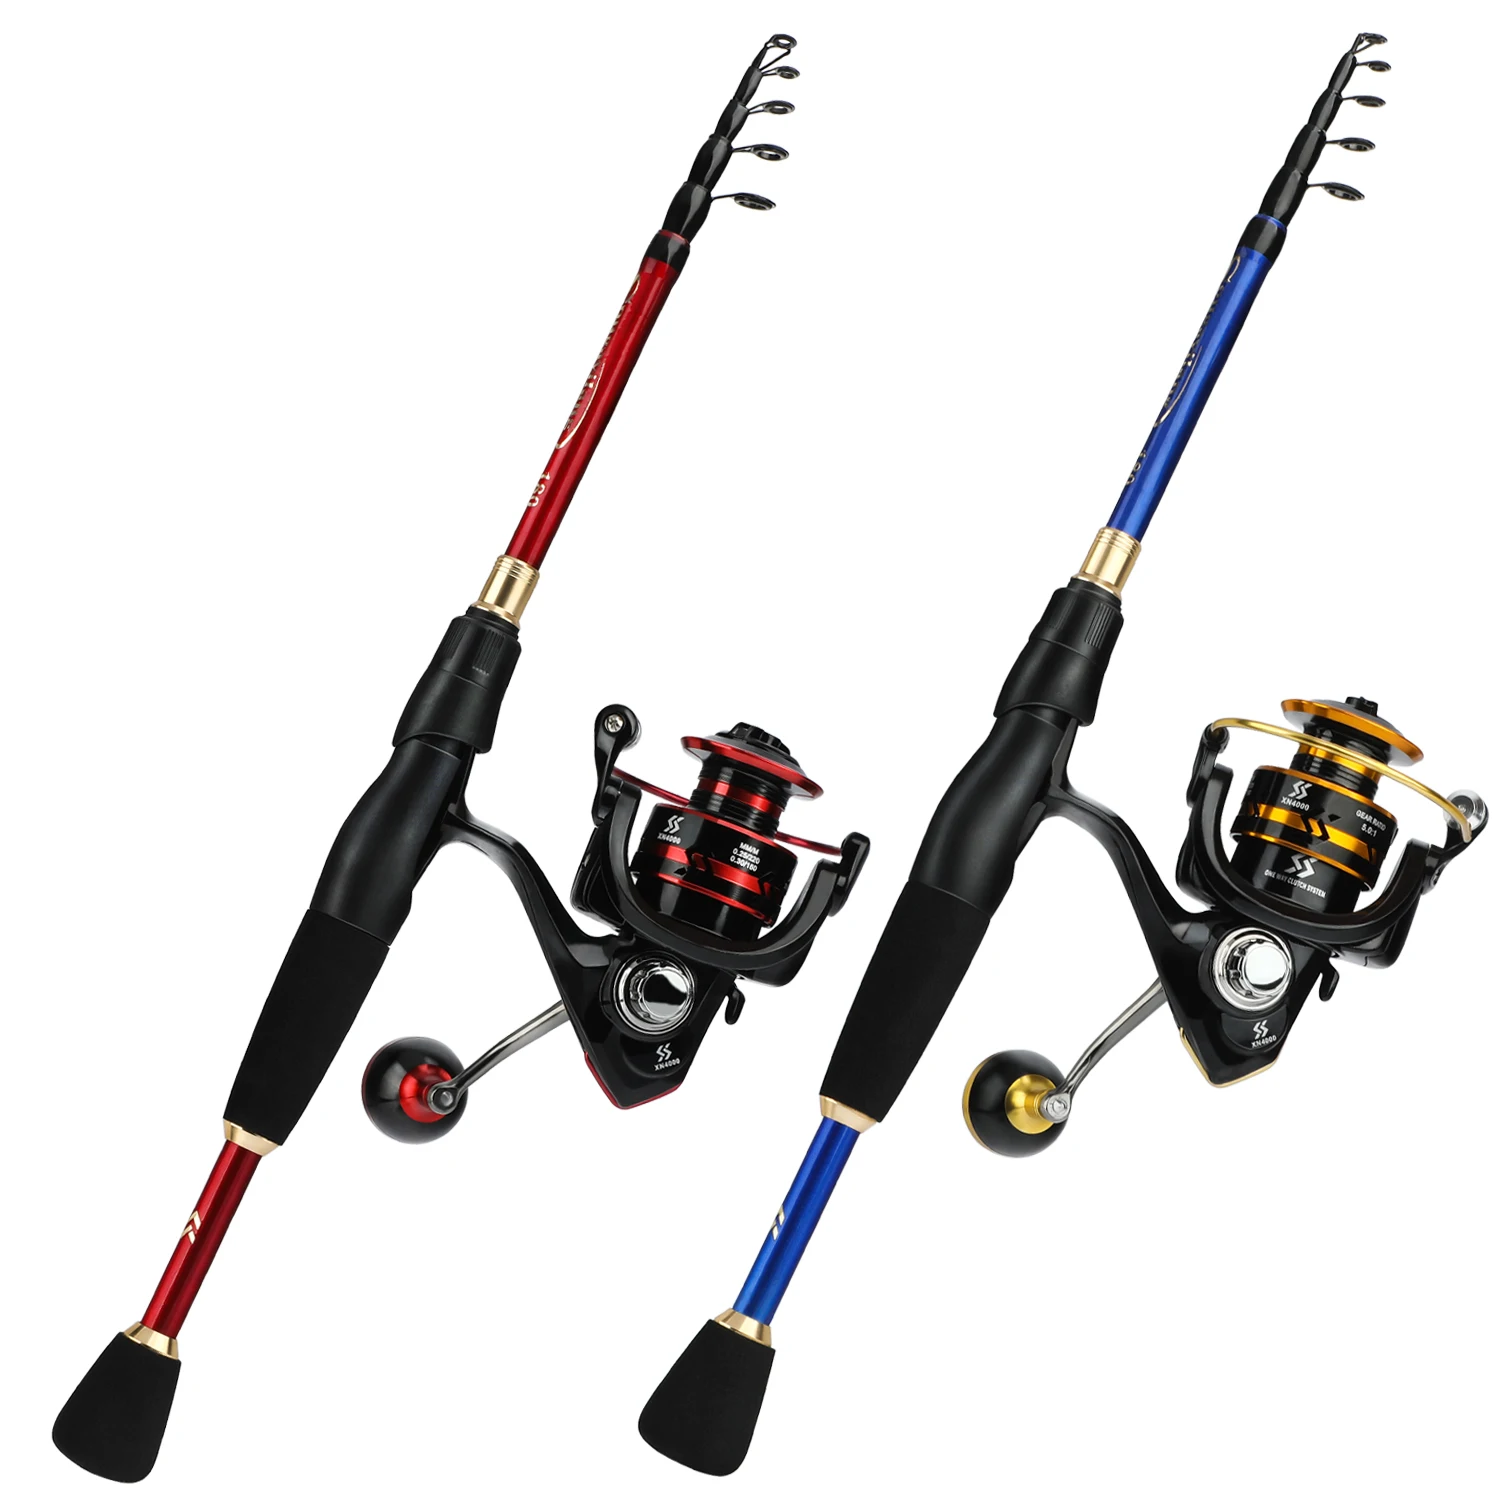 Sougayilang Fishing Rod and Reel Combos 6.3:1 Casting Reel Carbon